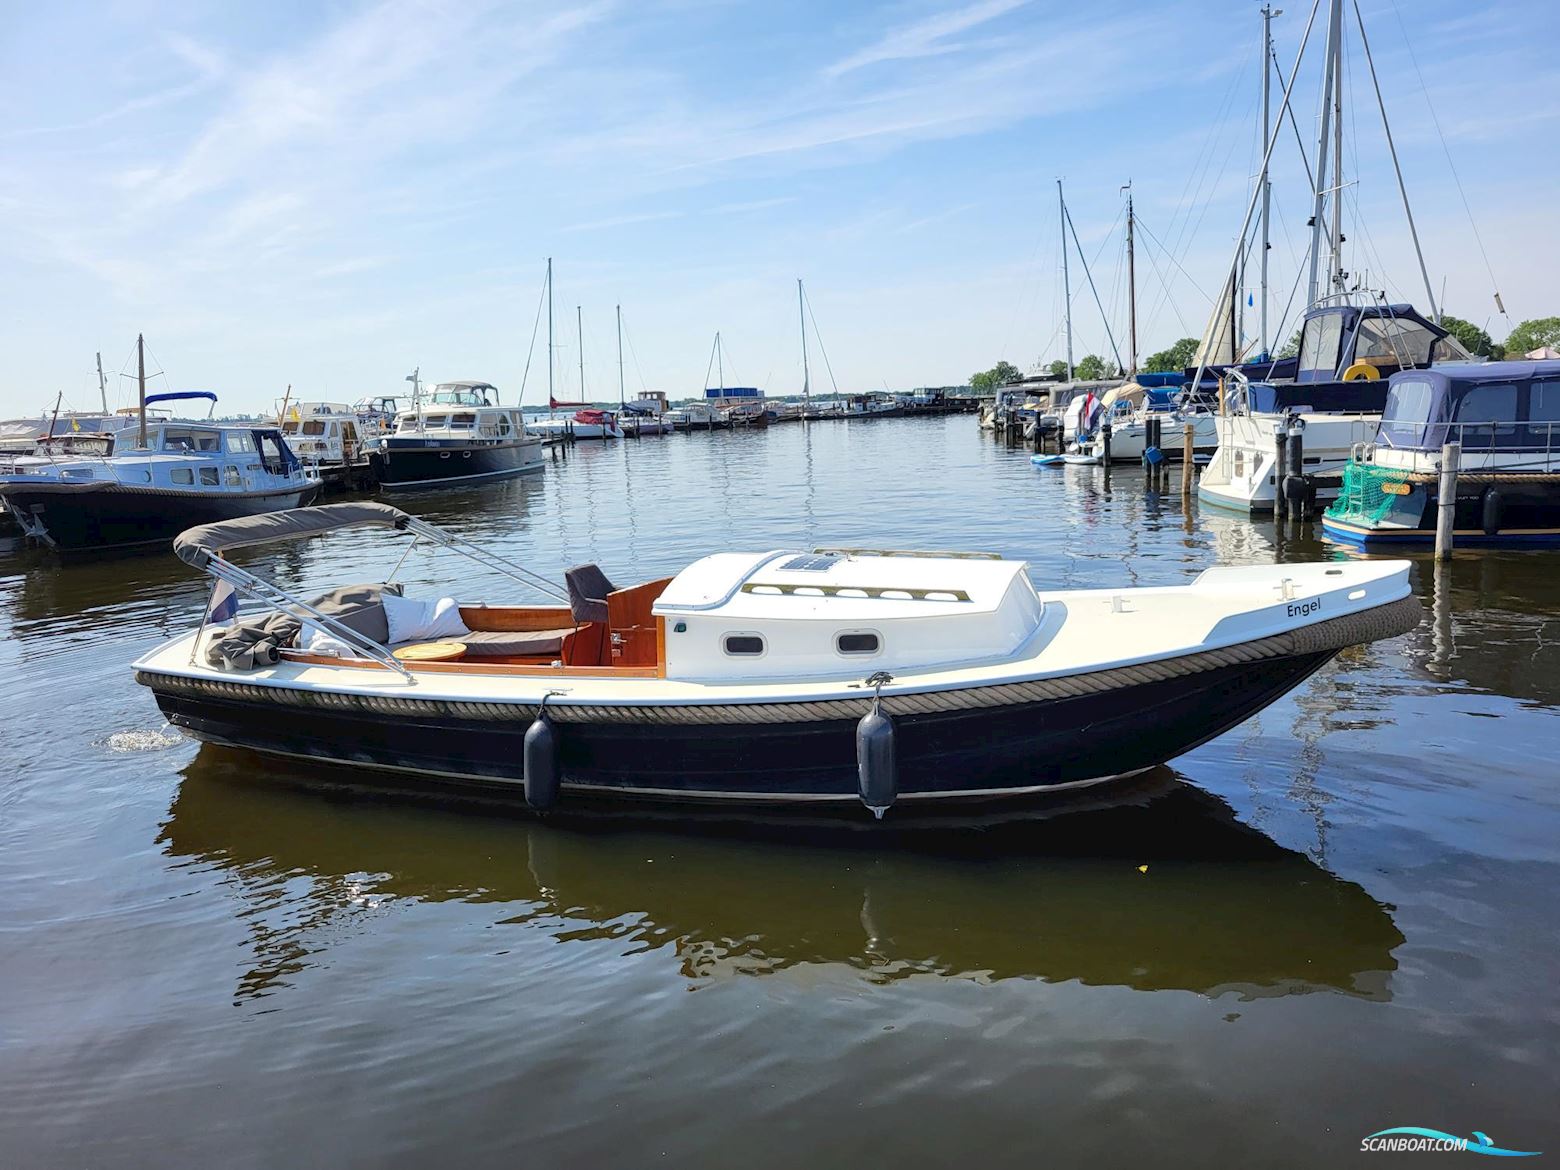 Langenberg Borndiep Vlet 800 Motorboot 2000, mit Sole motor, Niederlande